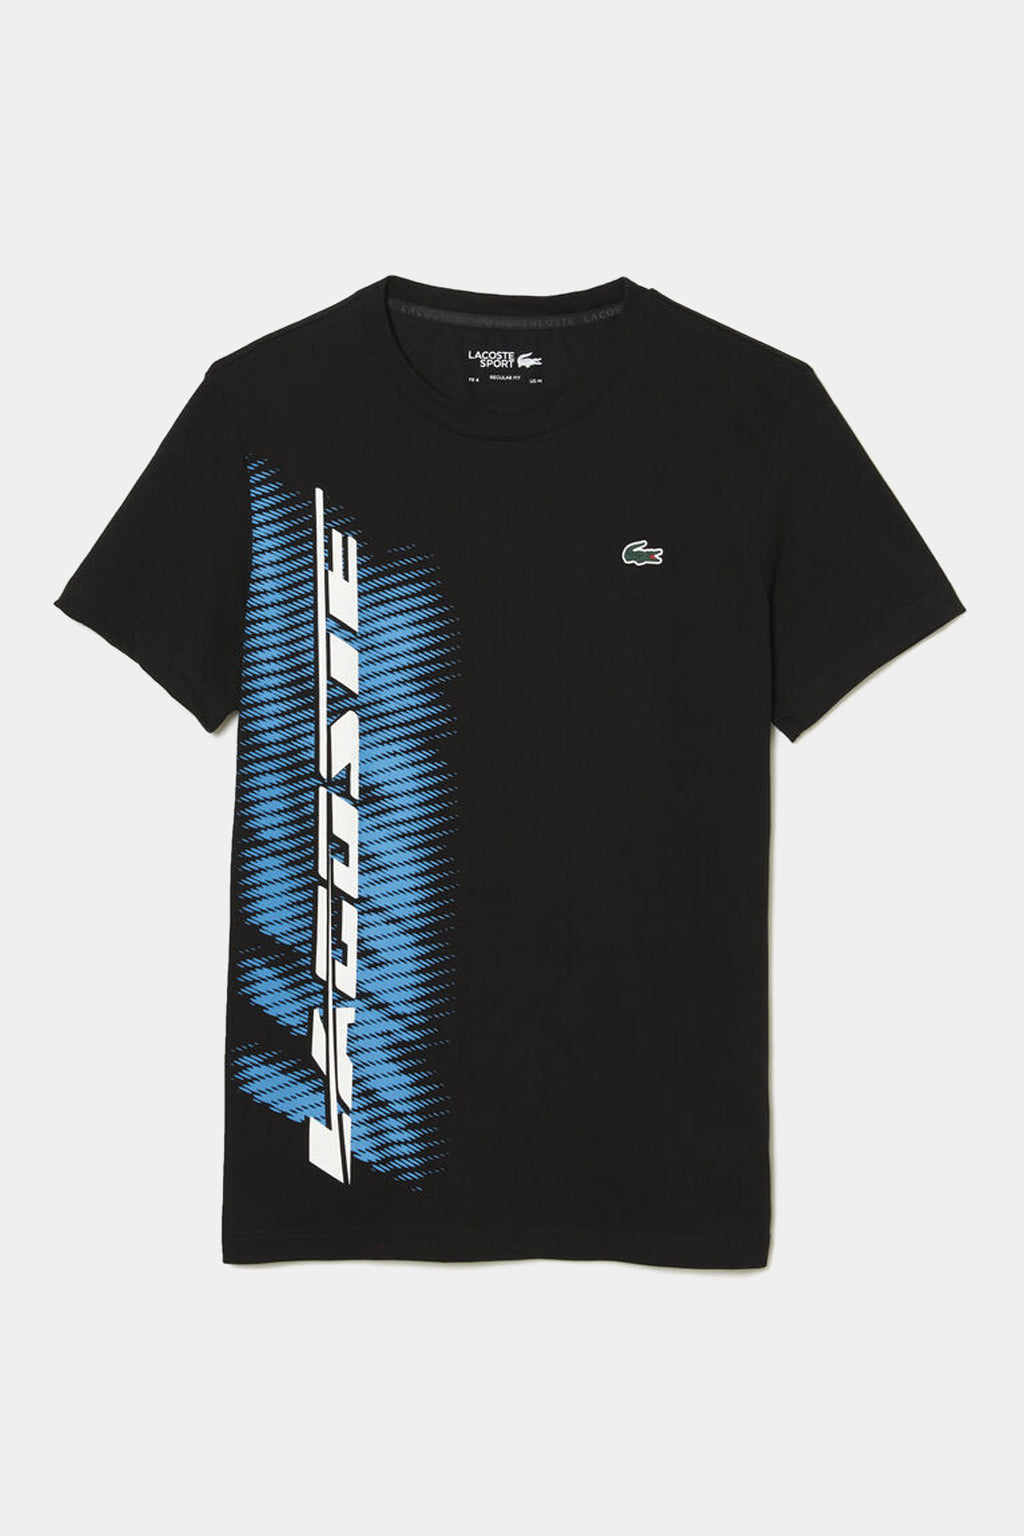 Lacoste - Men’s Lacoste Sport Regular Fit T-shirt With Contrast Branding